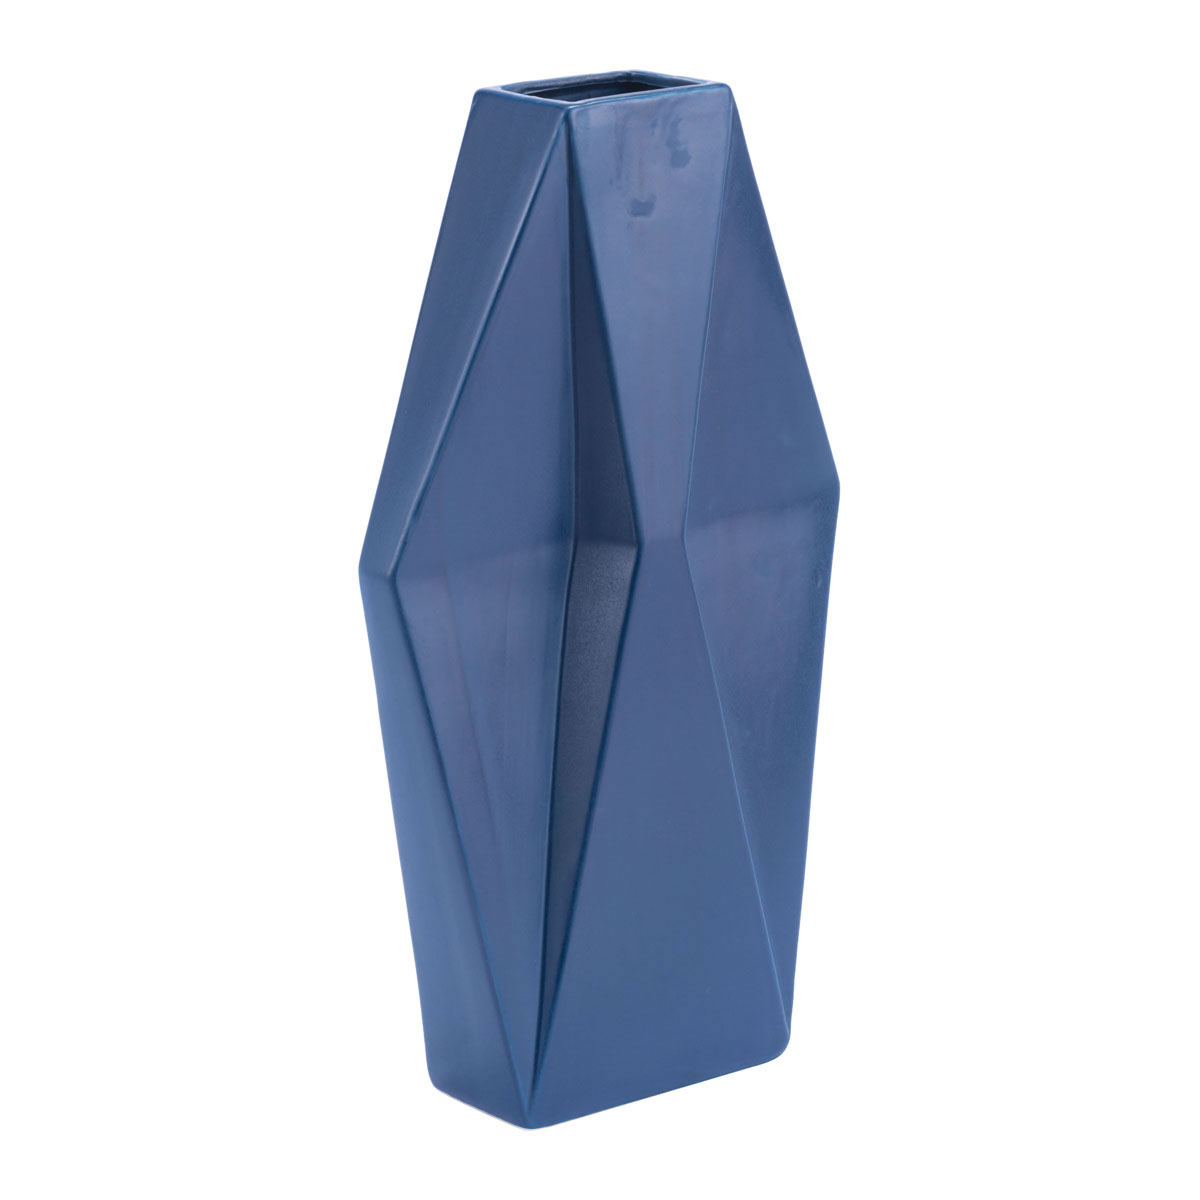 10.2" x 3.9" x 17.7" Matte Blue, Ceramic, Large Vase